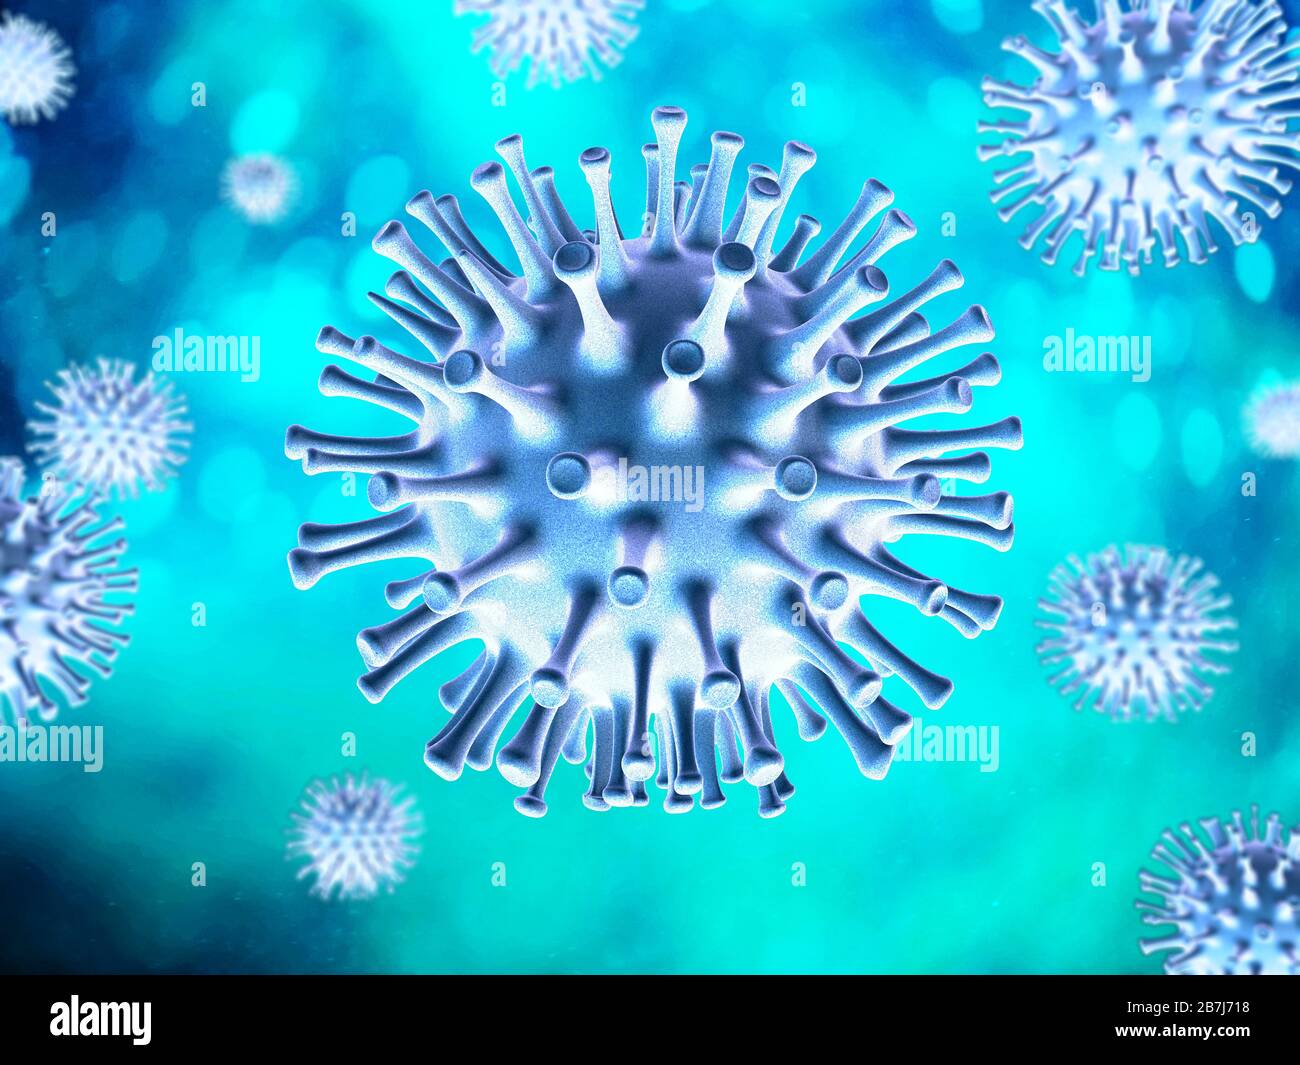 Corona-Virenszene. Blaue Motive auf türkisfarbenem Hintergrund. Stockfoto